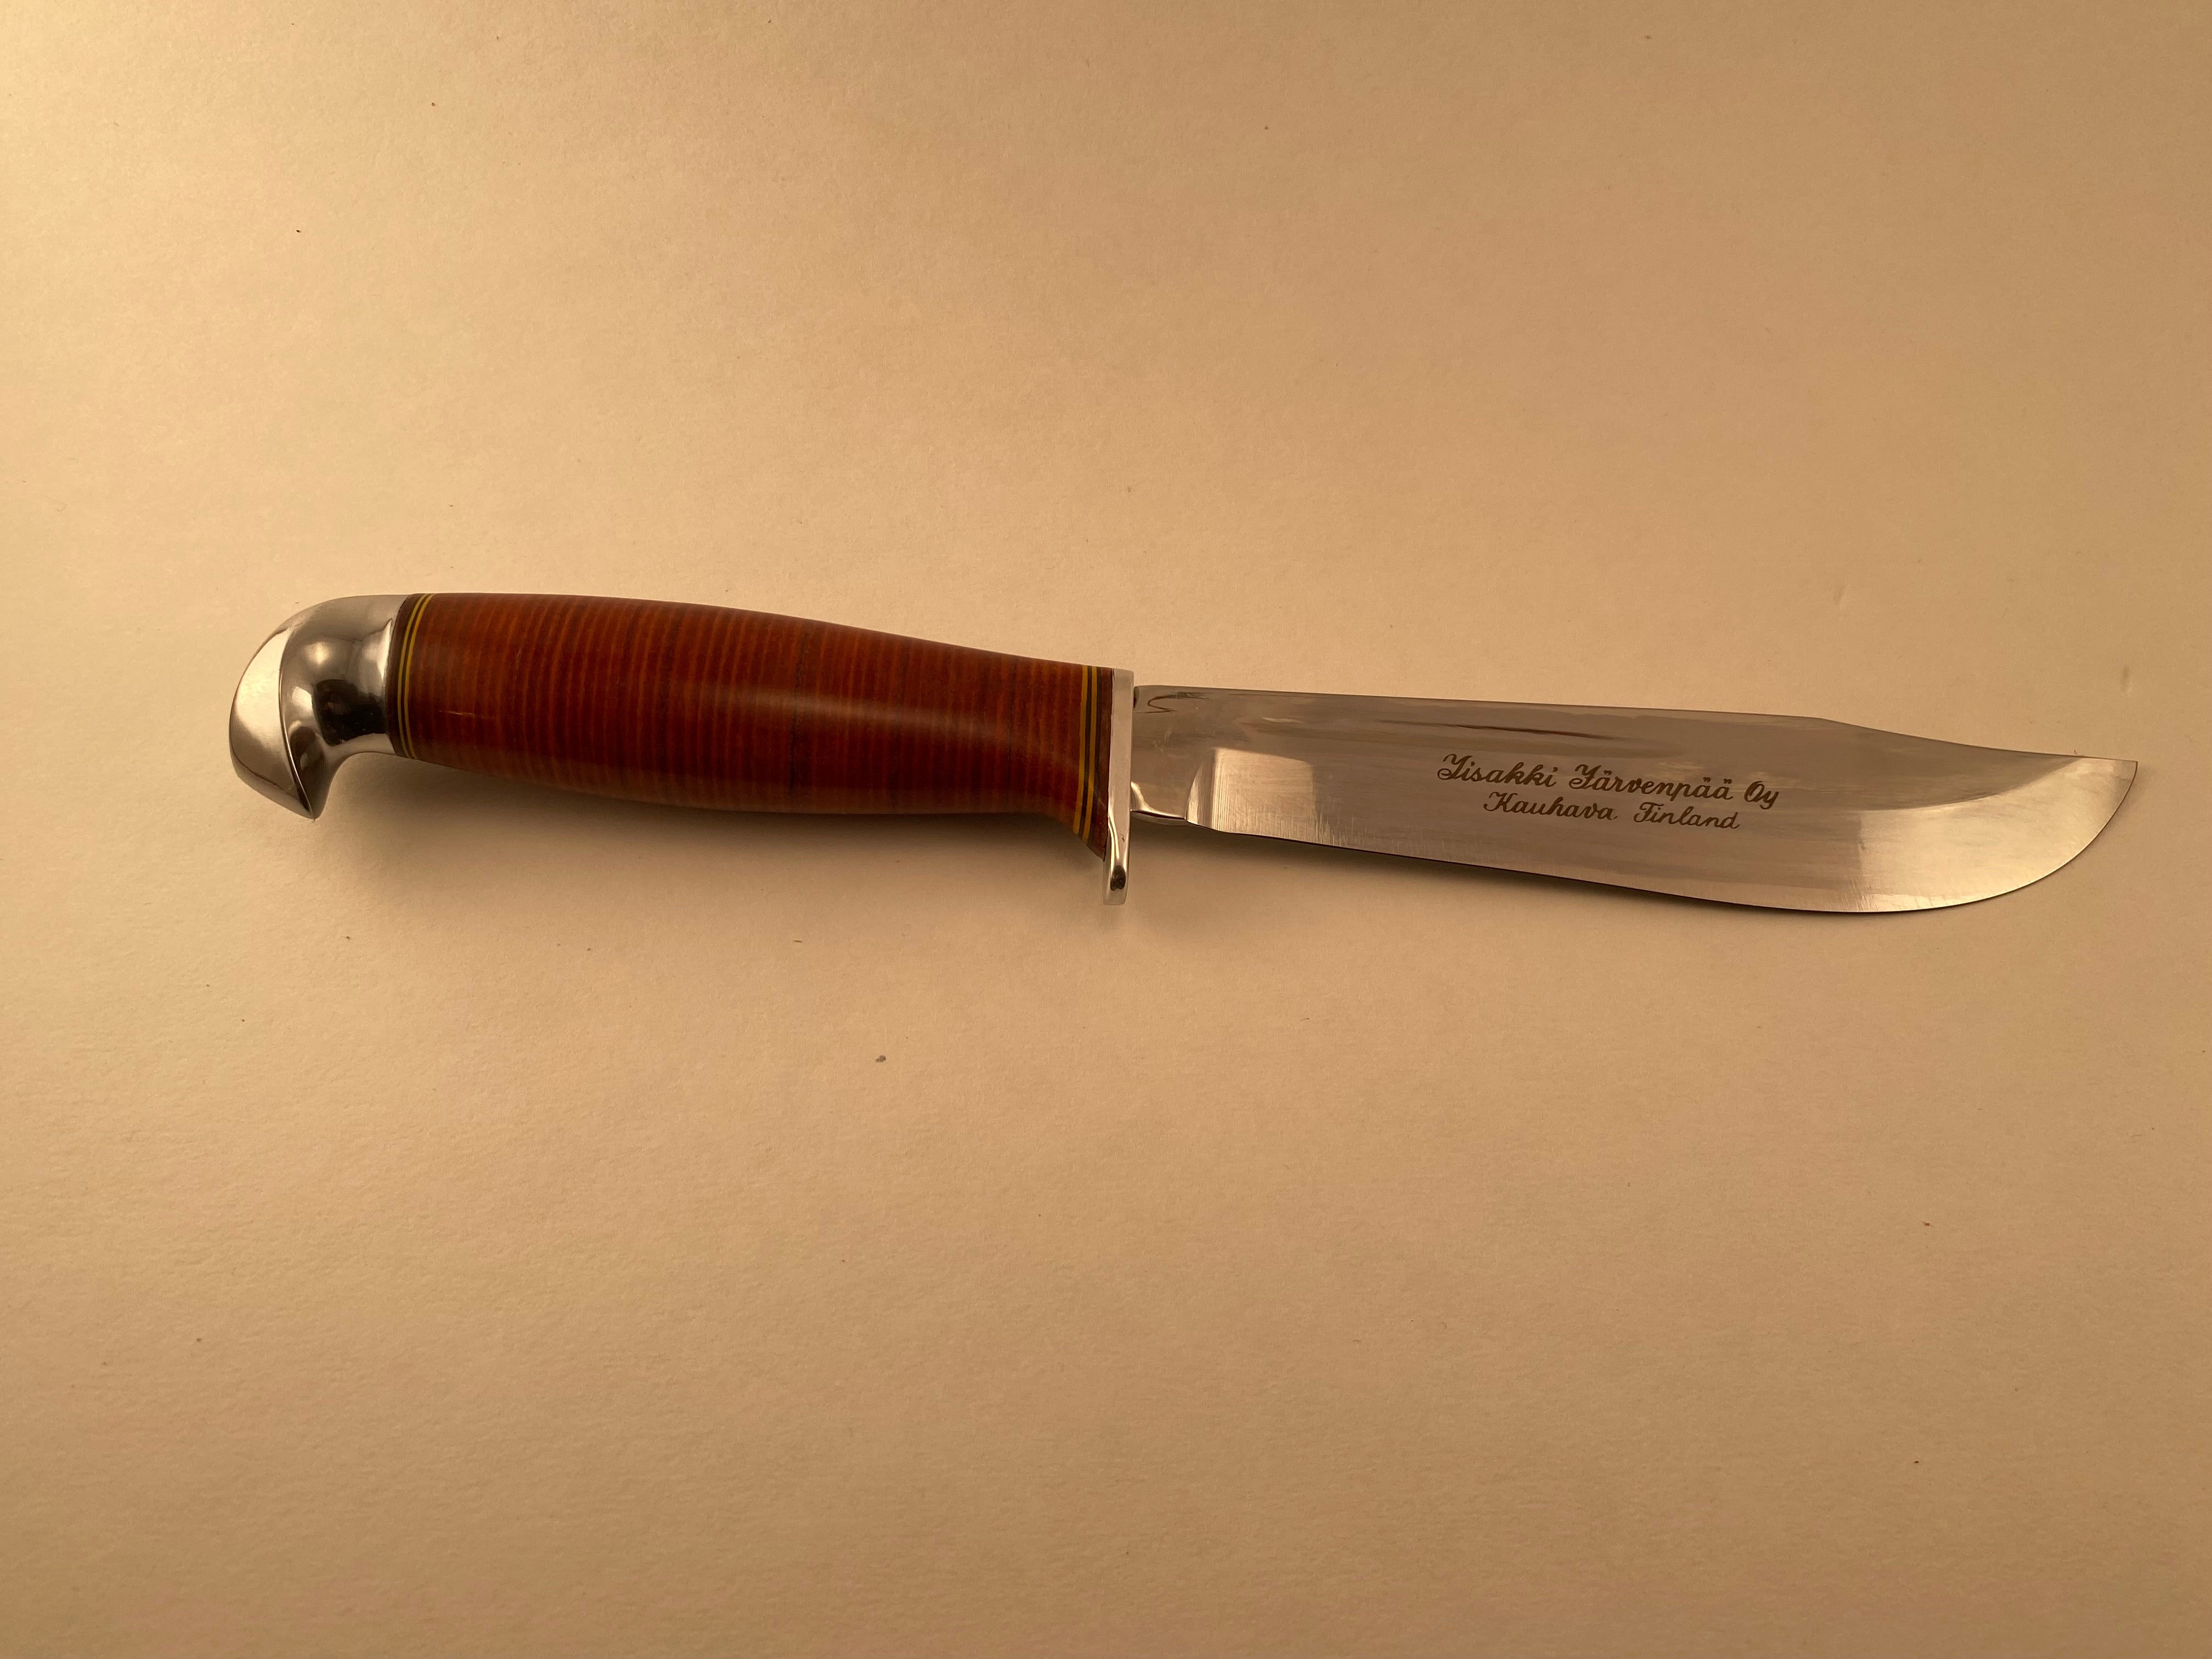 Mora Stainless Steel Bushcraft Knife ~ Visible Orange Handle